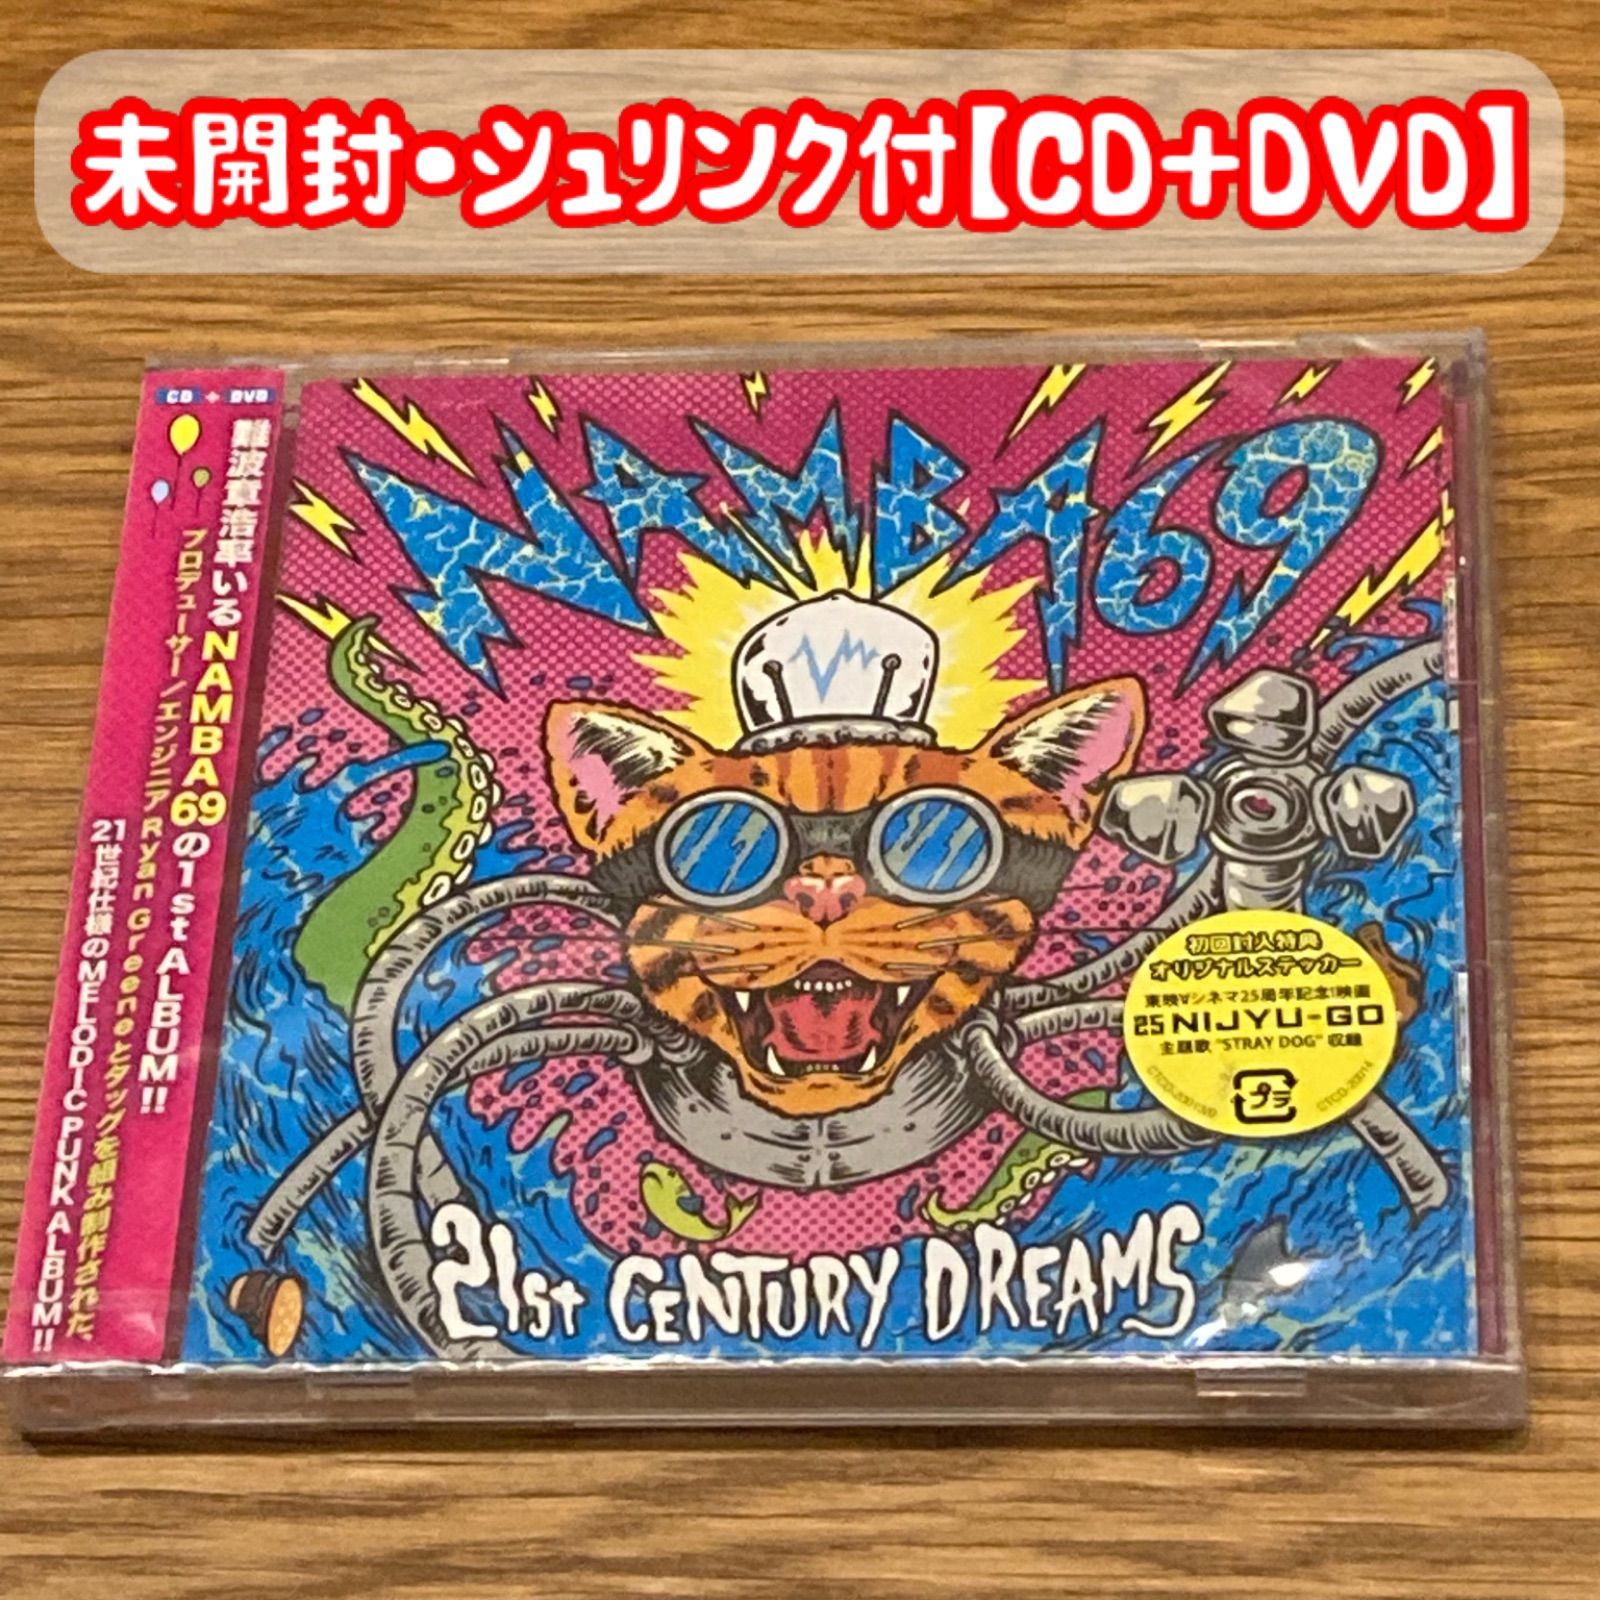 NAMBA69/21st CENTURY DREAMS 【CD+DVD】 - メルカリ